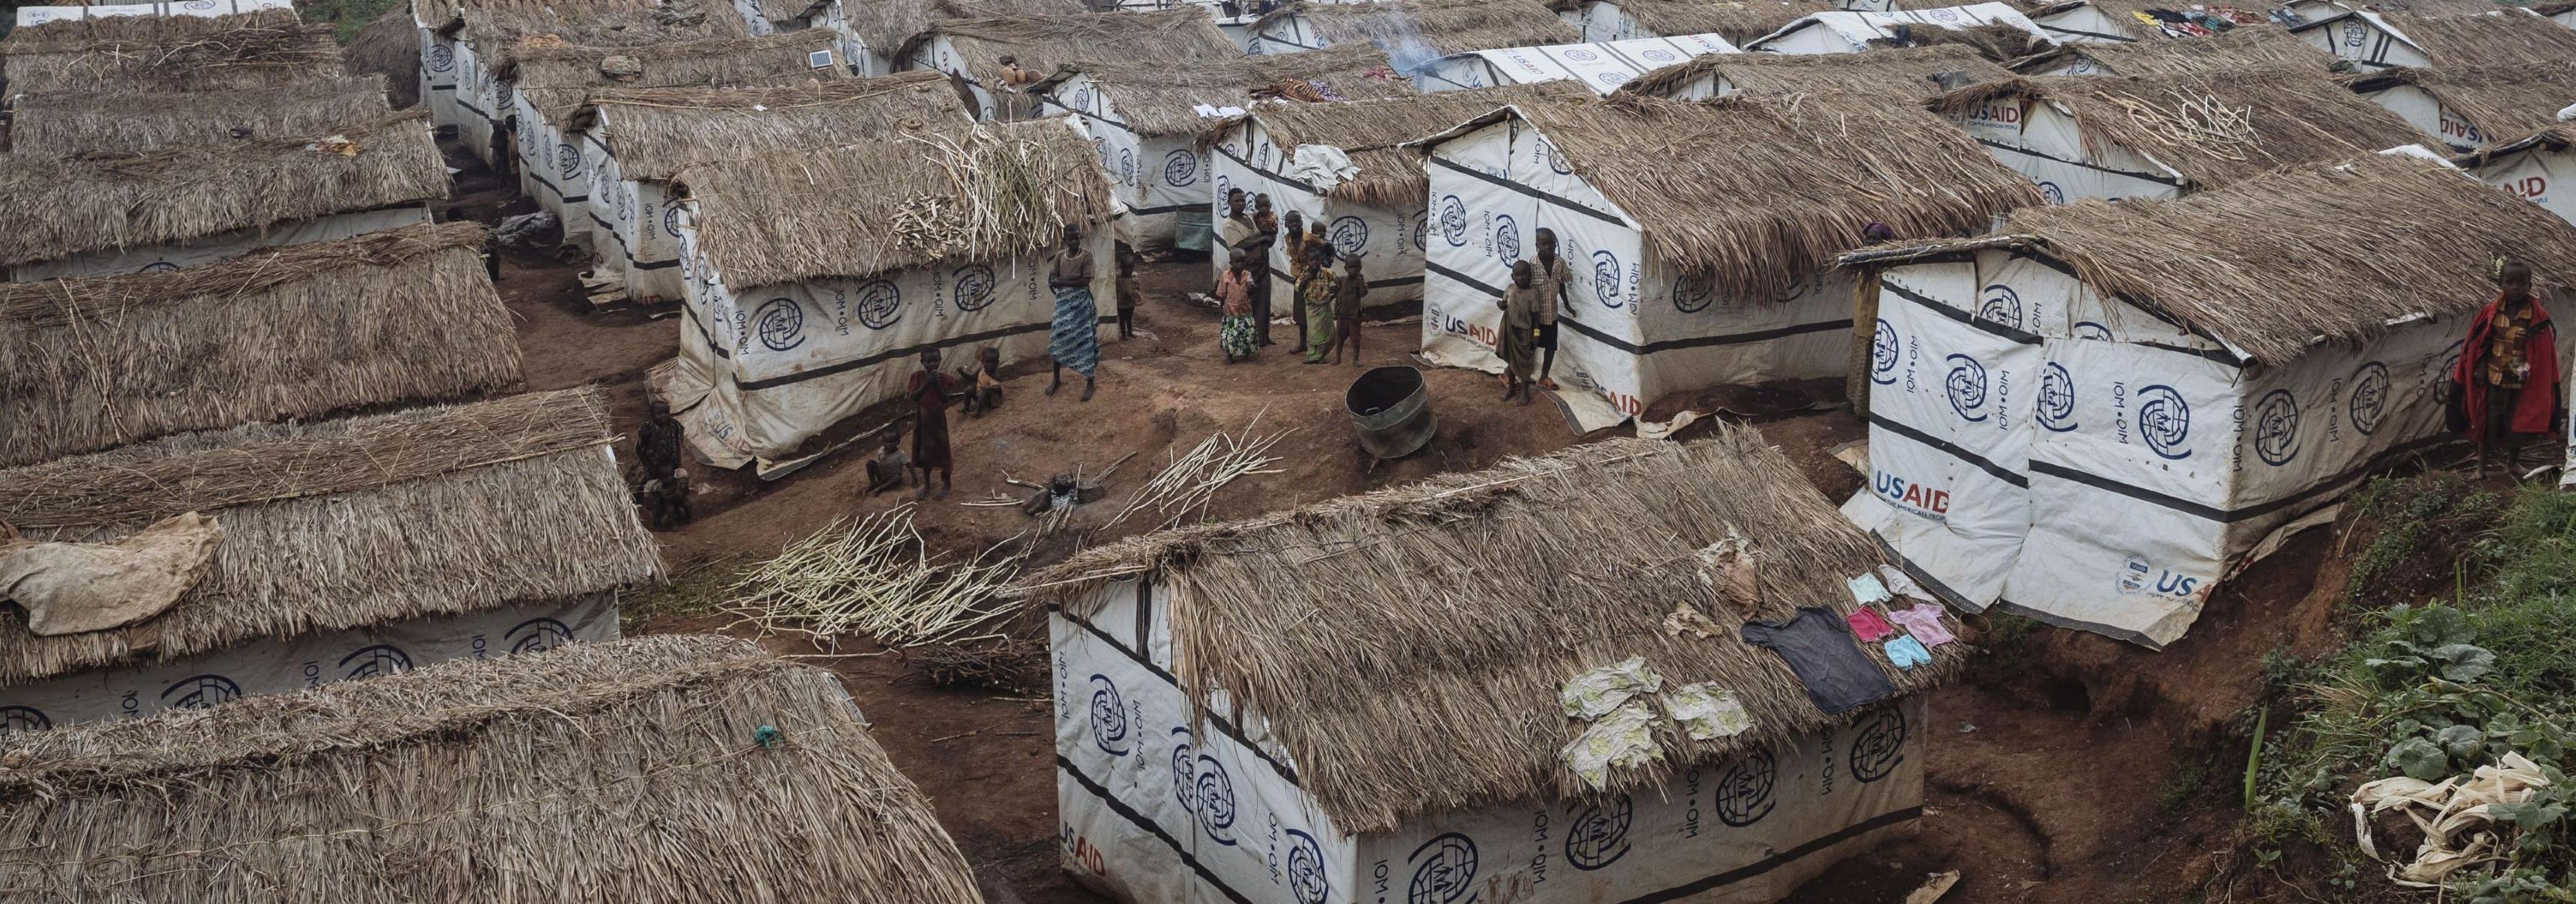 Emergency shelter at IDP site Lindji, Ituri province